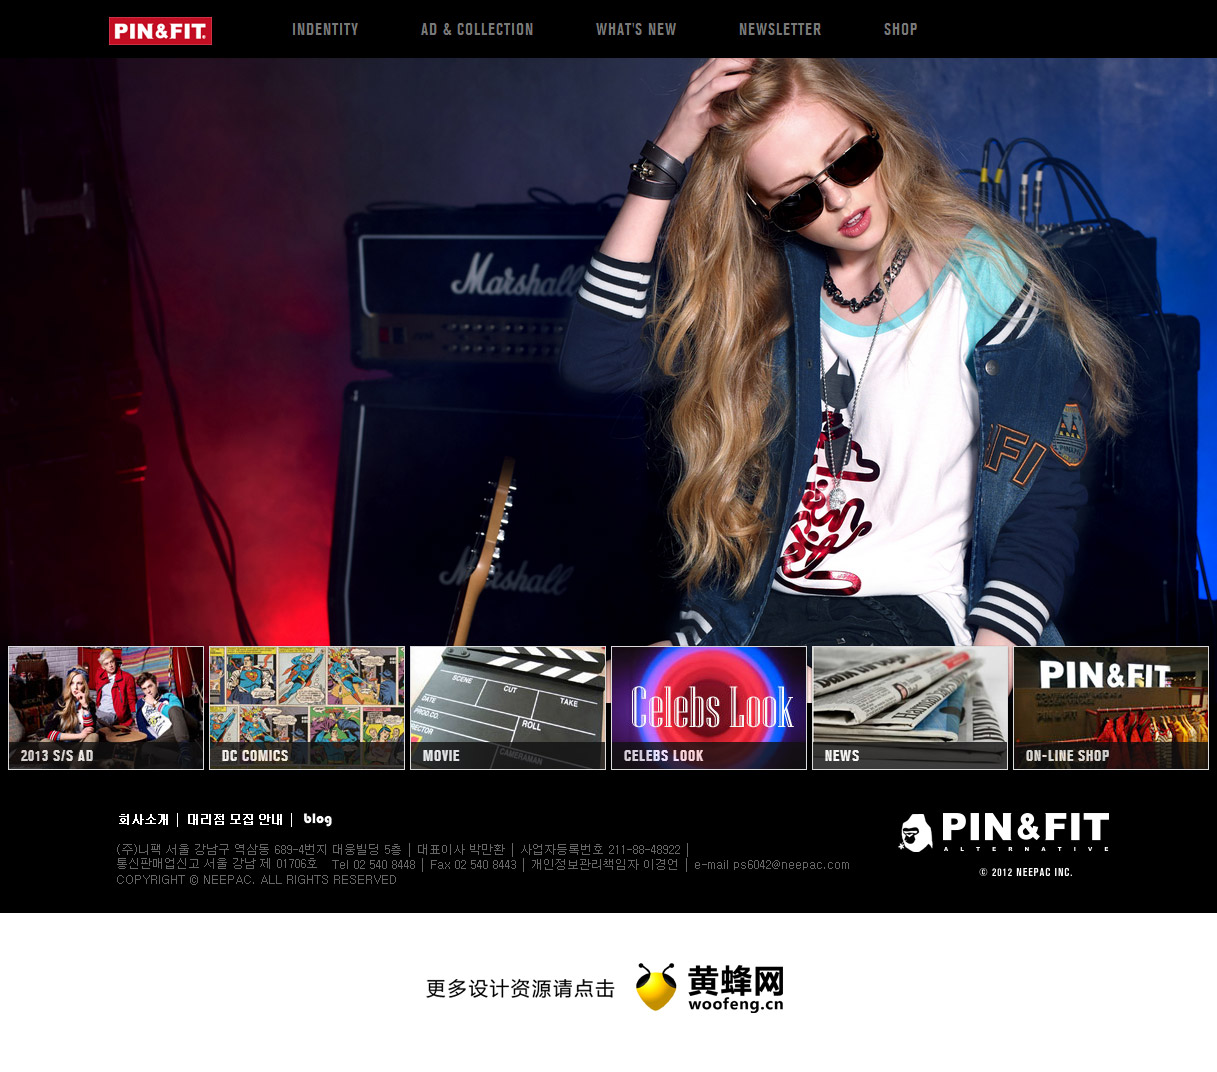 PIN&FIT韩国服饰品牌网站，来源自黄蜂网https://woofeng.cn/web/